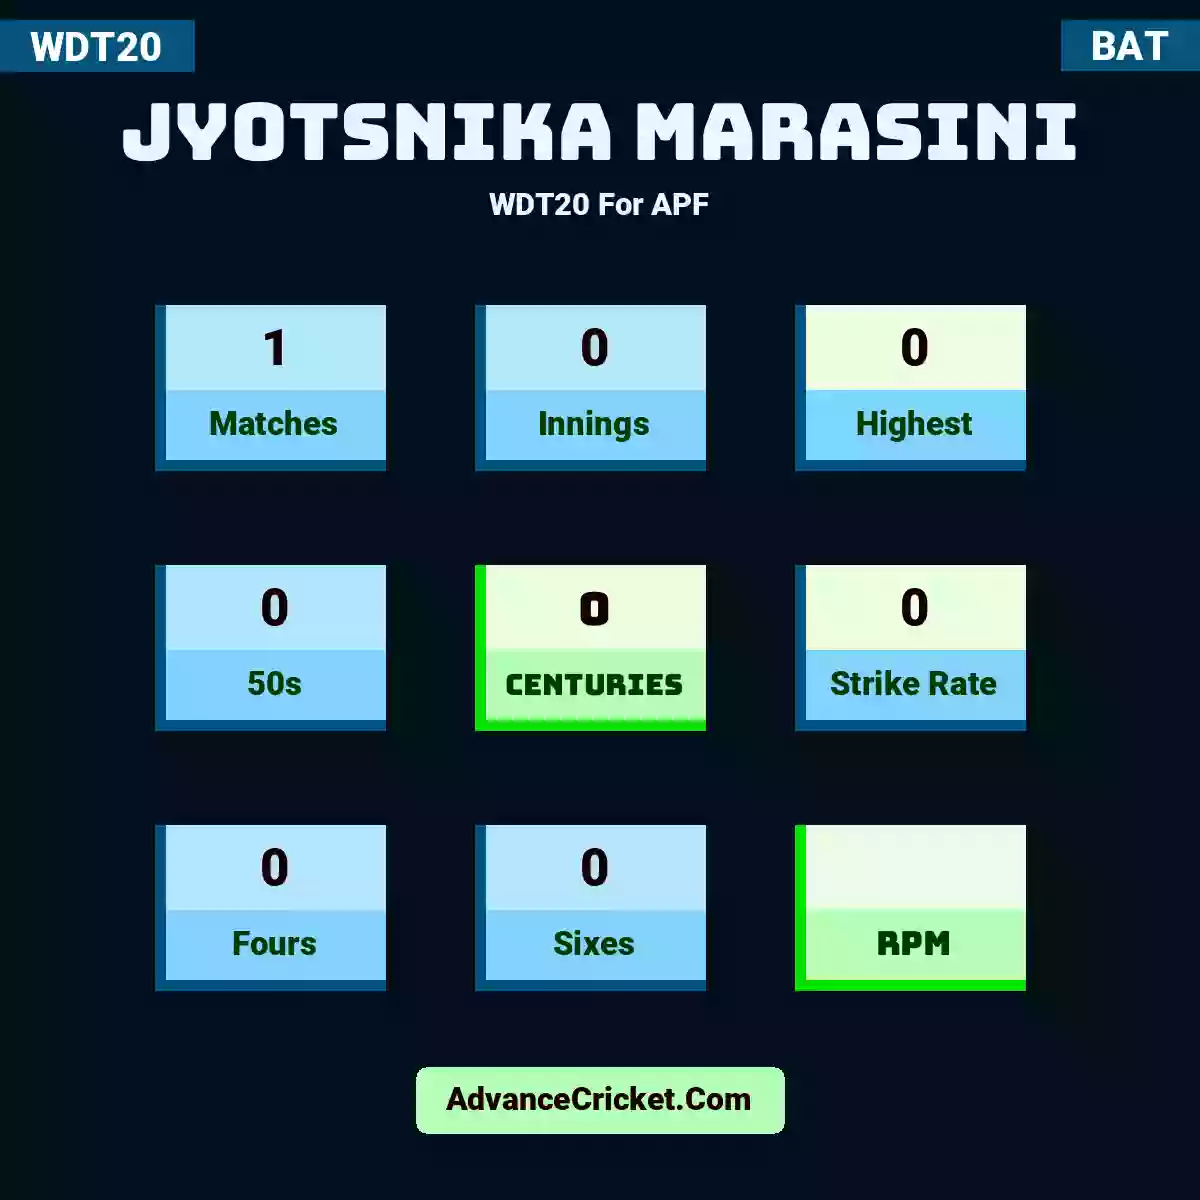 Jyotsnika Marasini WDT20  For APF, Jyotsnika Marasini played 1 matches, scored 0 runs as highest, 0 half-centuries, and 0 centuries, with a strike rate of 0. J.Marasini hit 0 fours and 0 sixes.